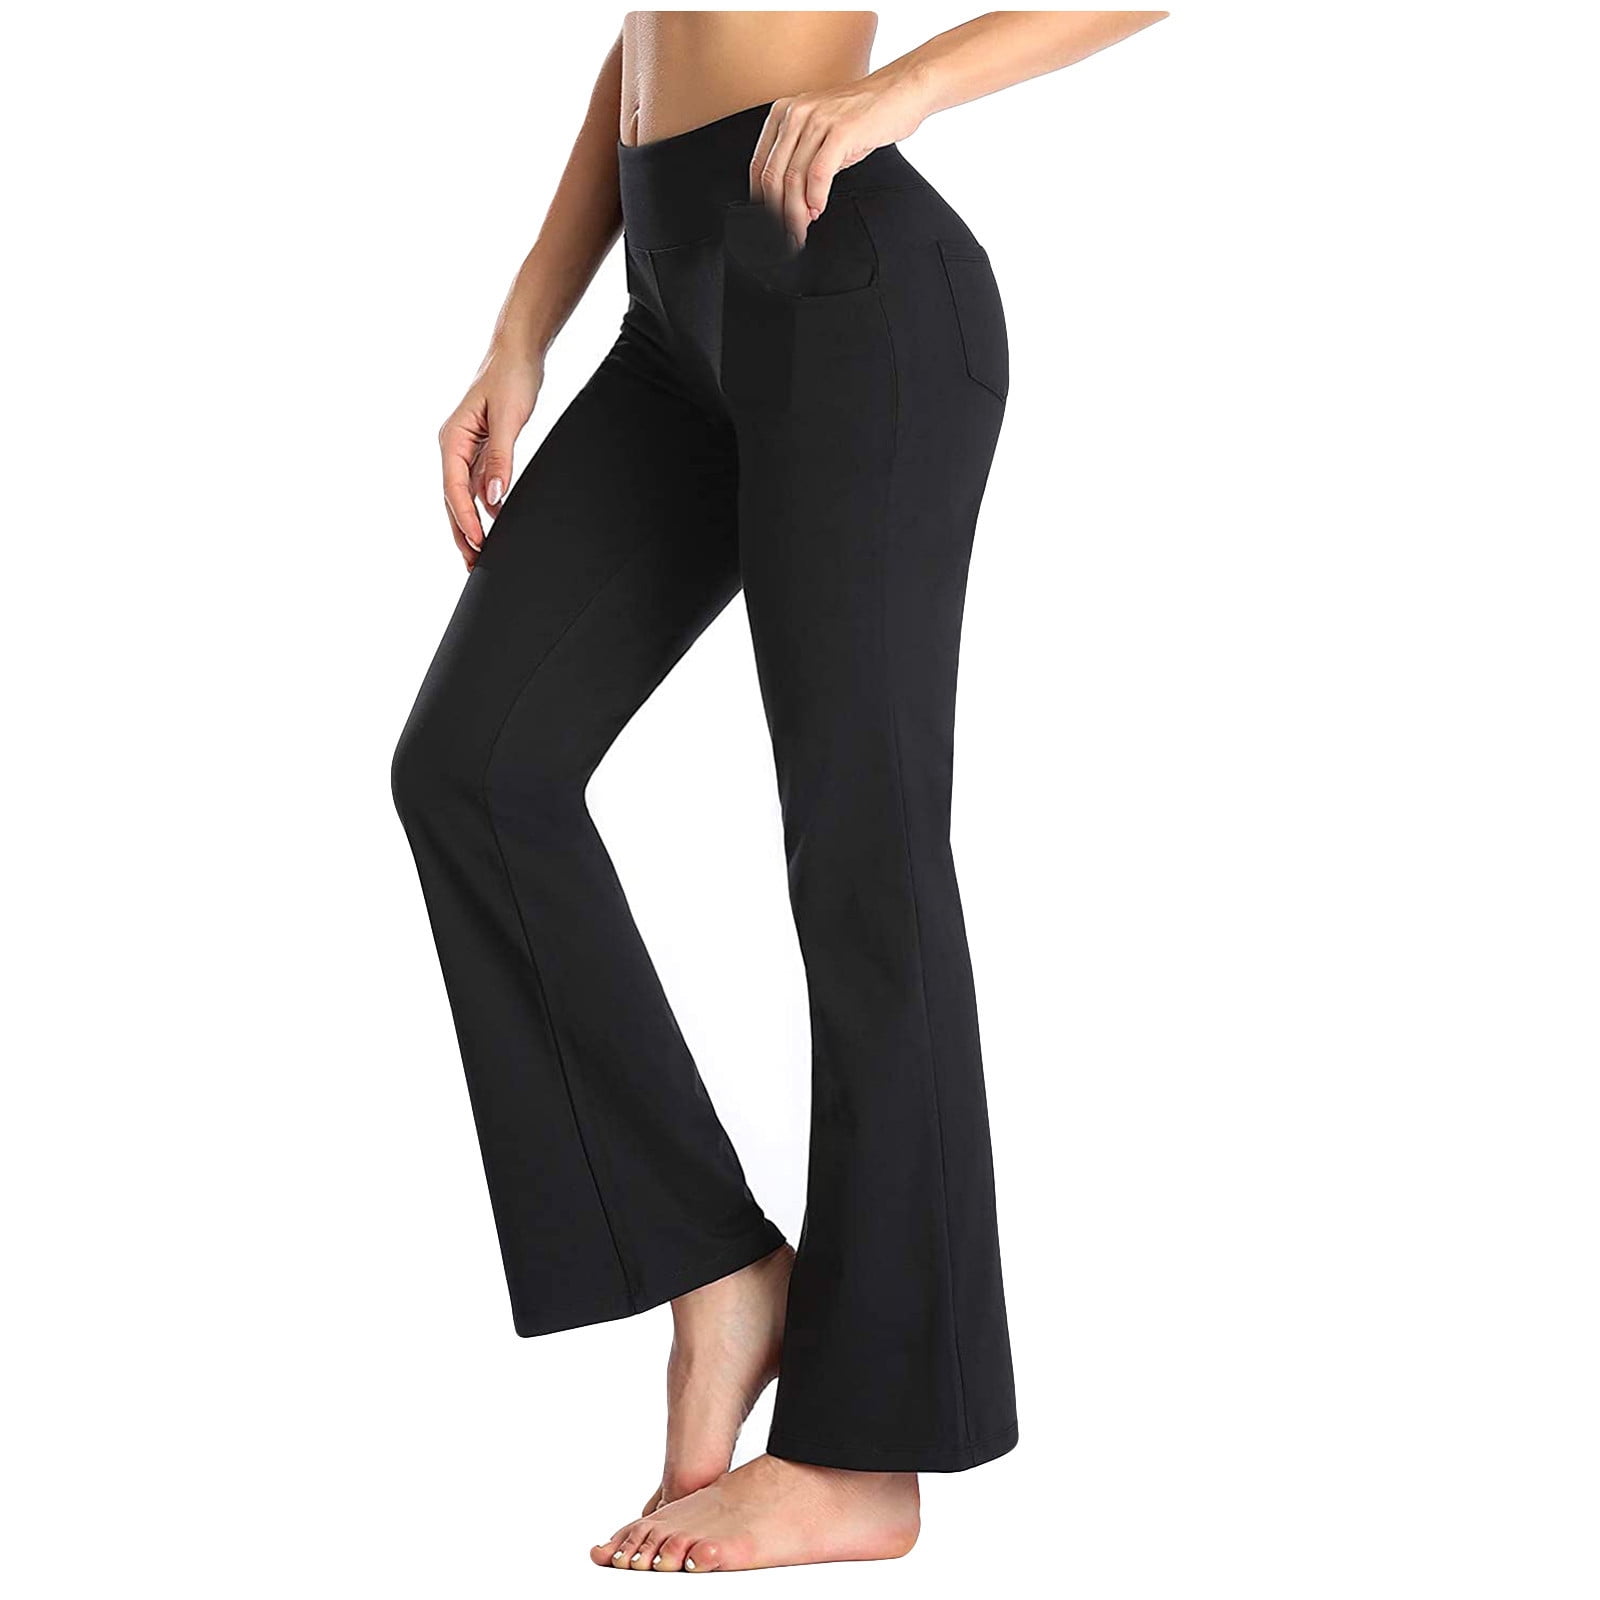 Clearance RYRJJ Women's Bootcut Yoga Pants with Pockets V